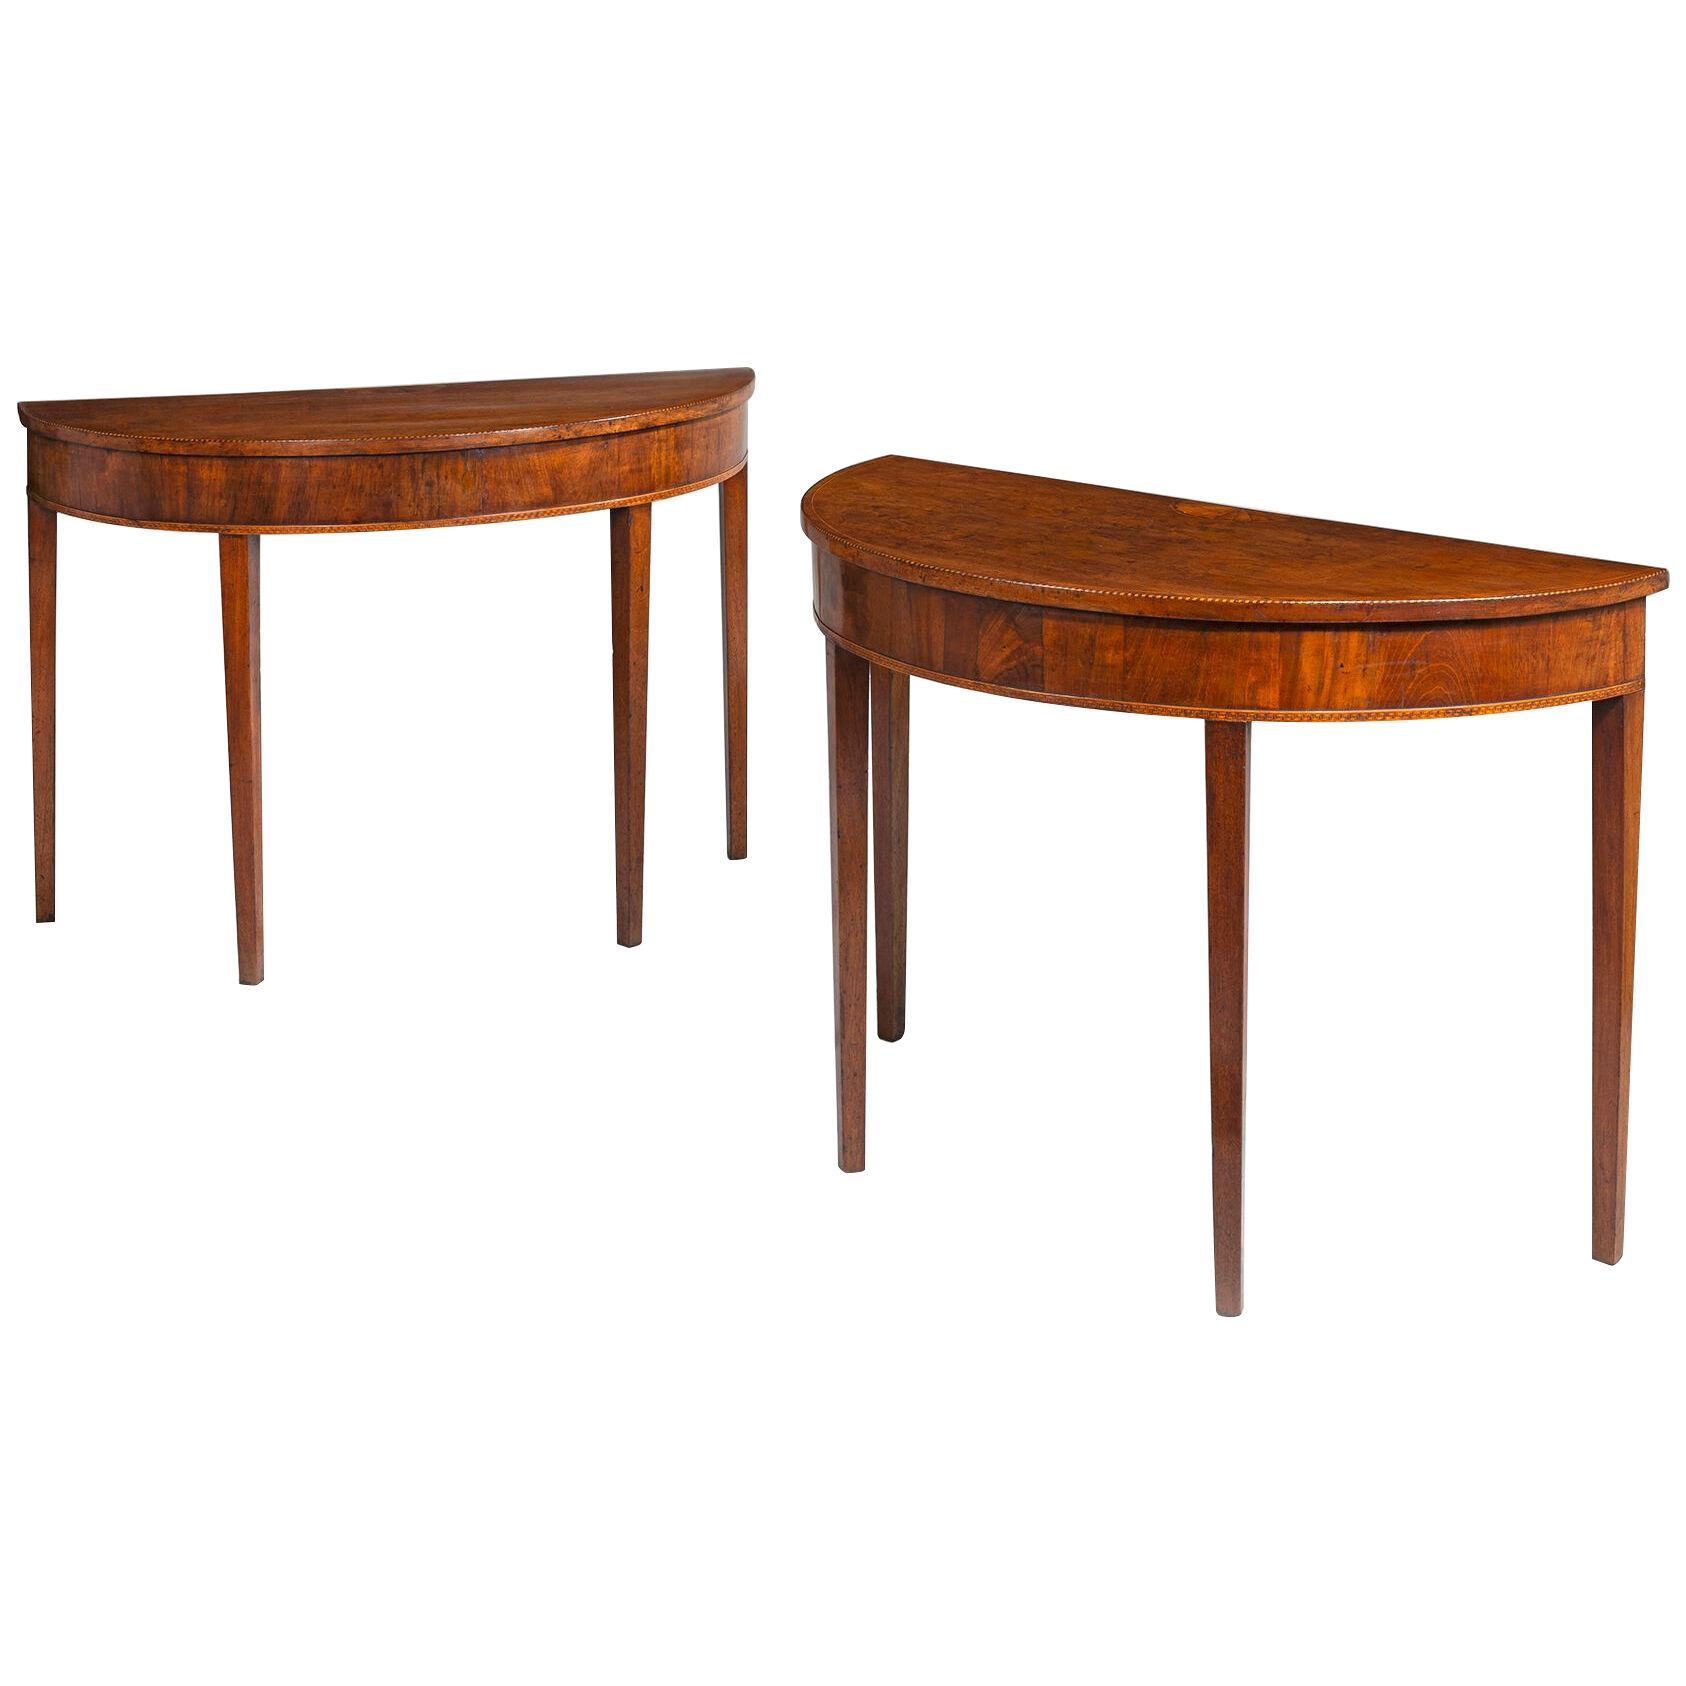 Pair of Sheraton mahogany demilune console tables